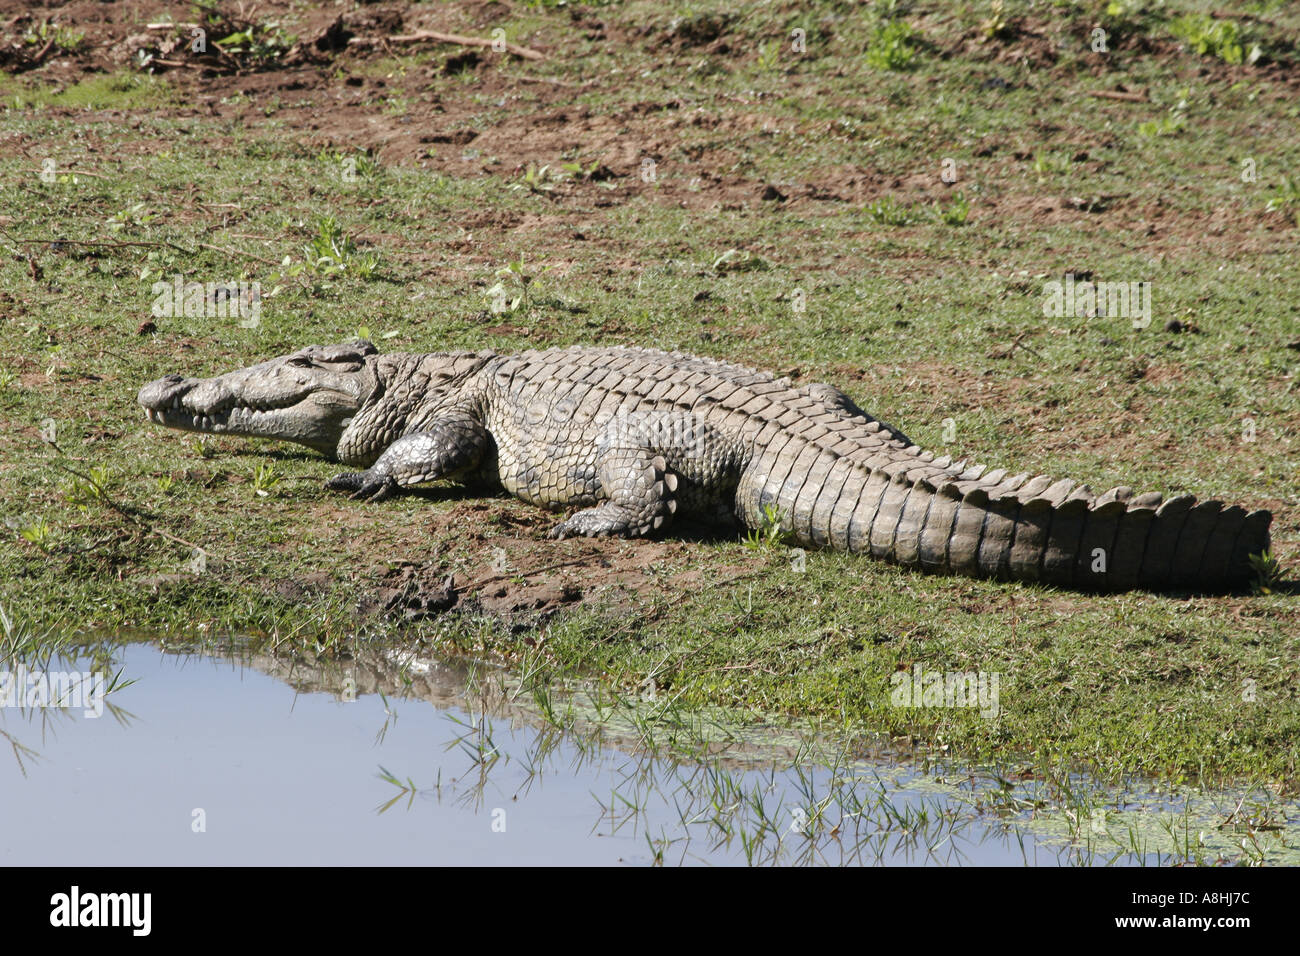 Crocodile basking in the sun Limpopo River Stock Photo